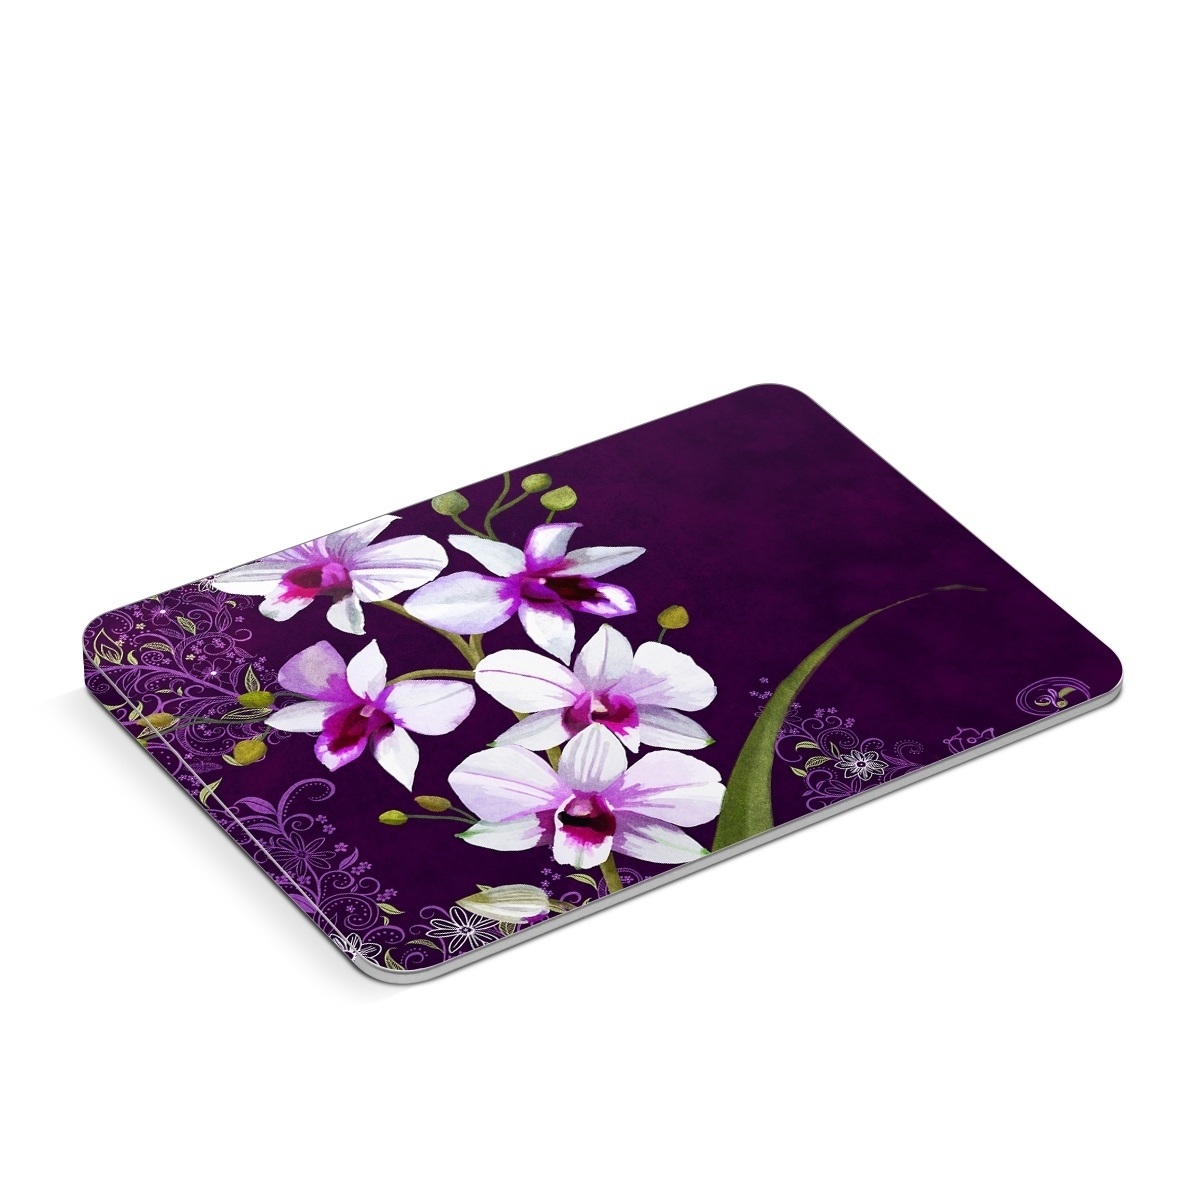 Magic Trackpad Skin - Violet Worlds (Image 1)